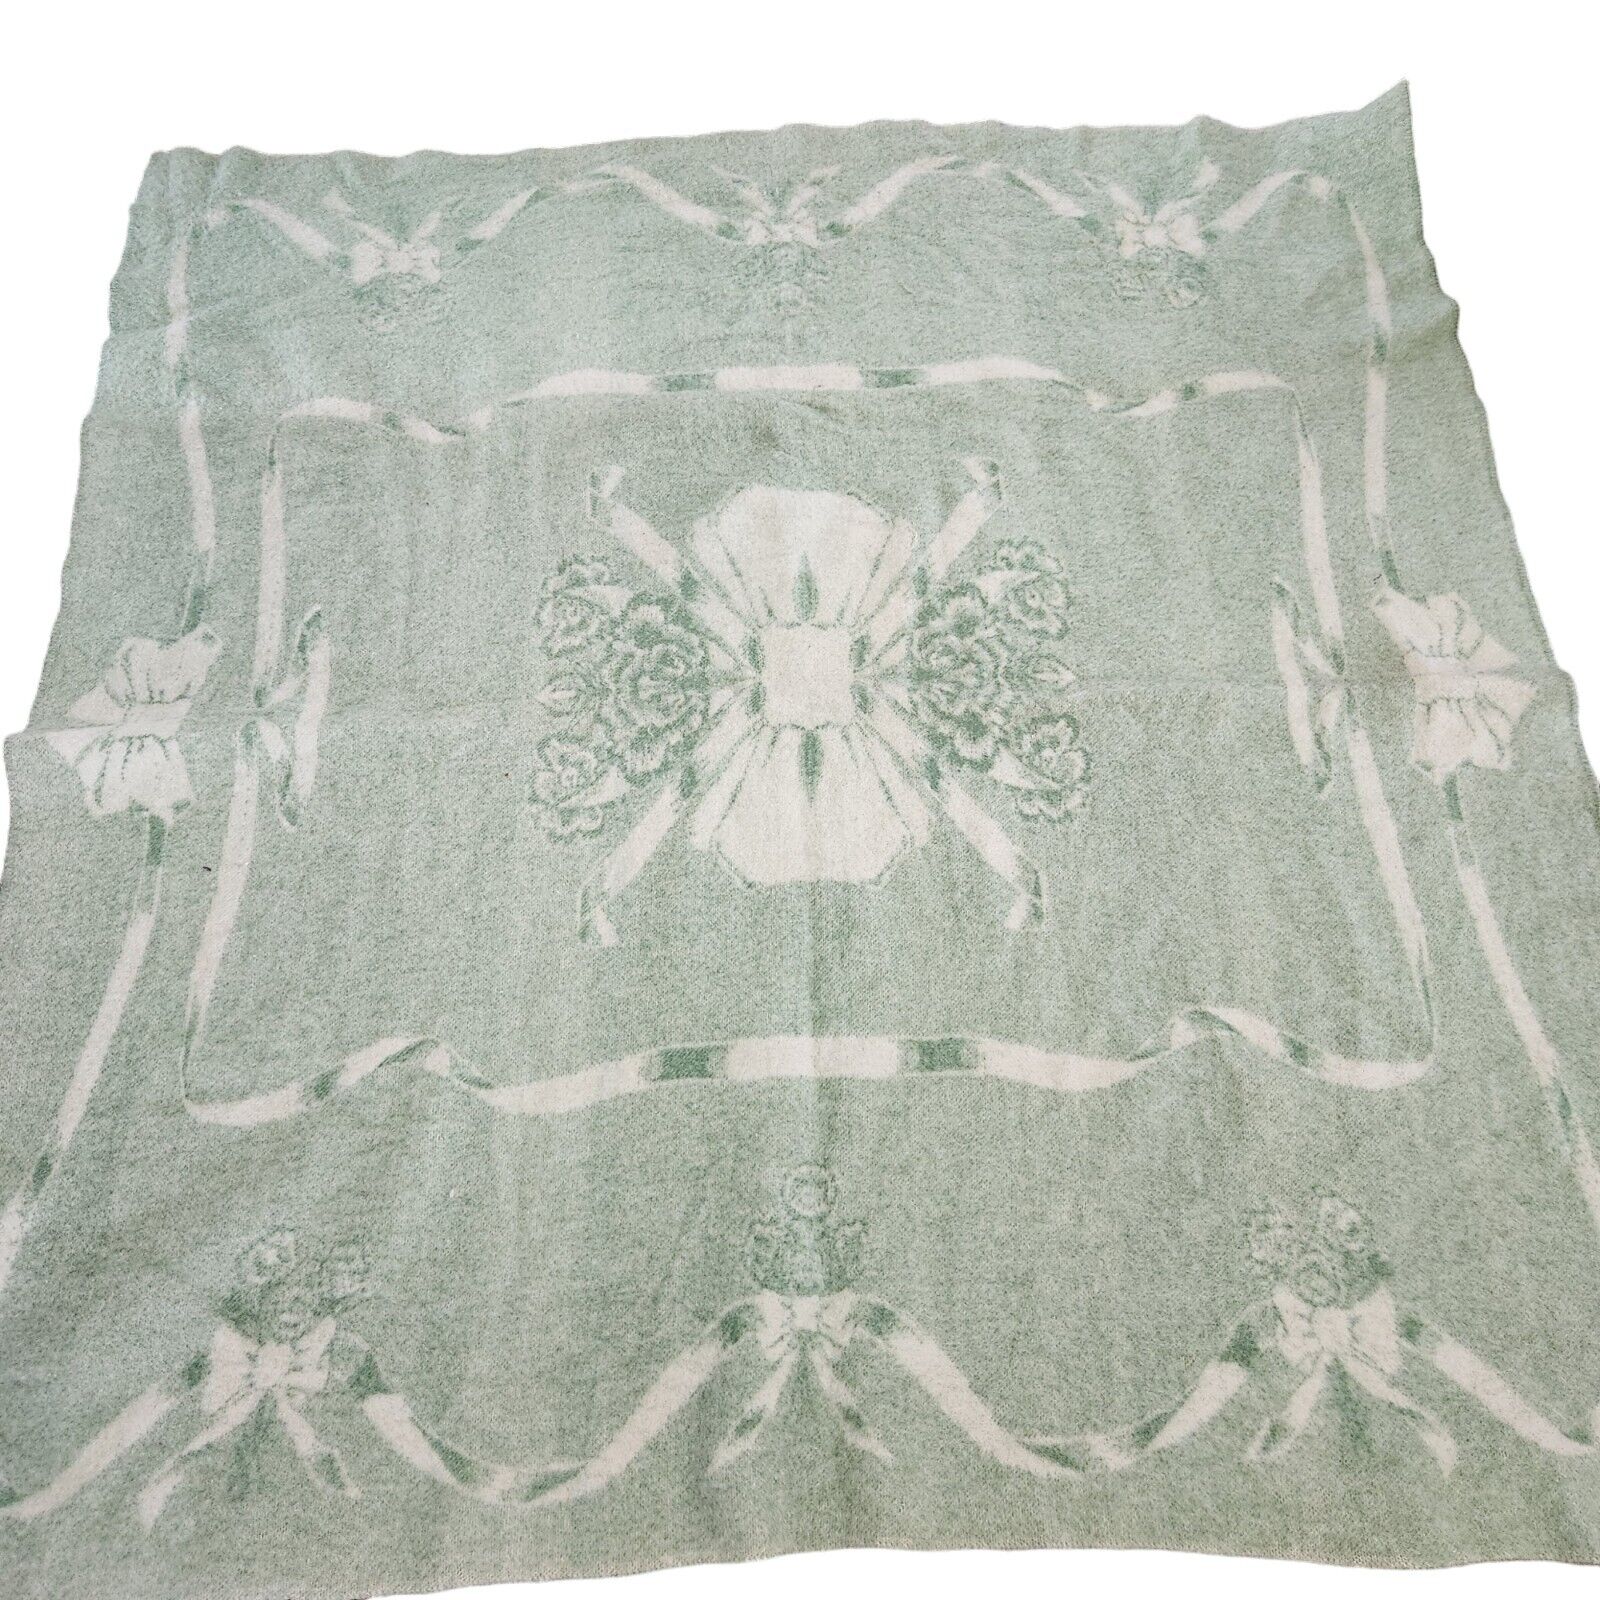 Green Wool Blanket Vintage Bed Spread Bows 85x85 Ribbons Reversible